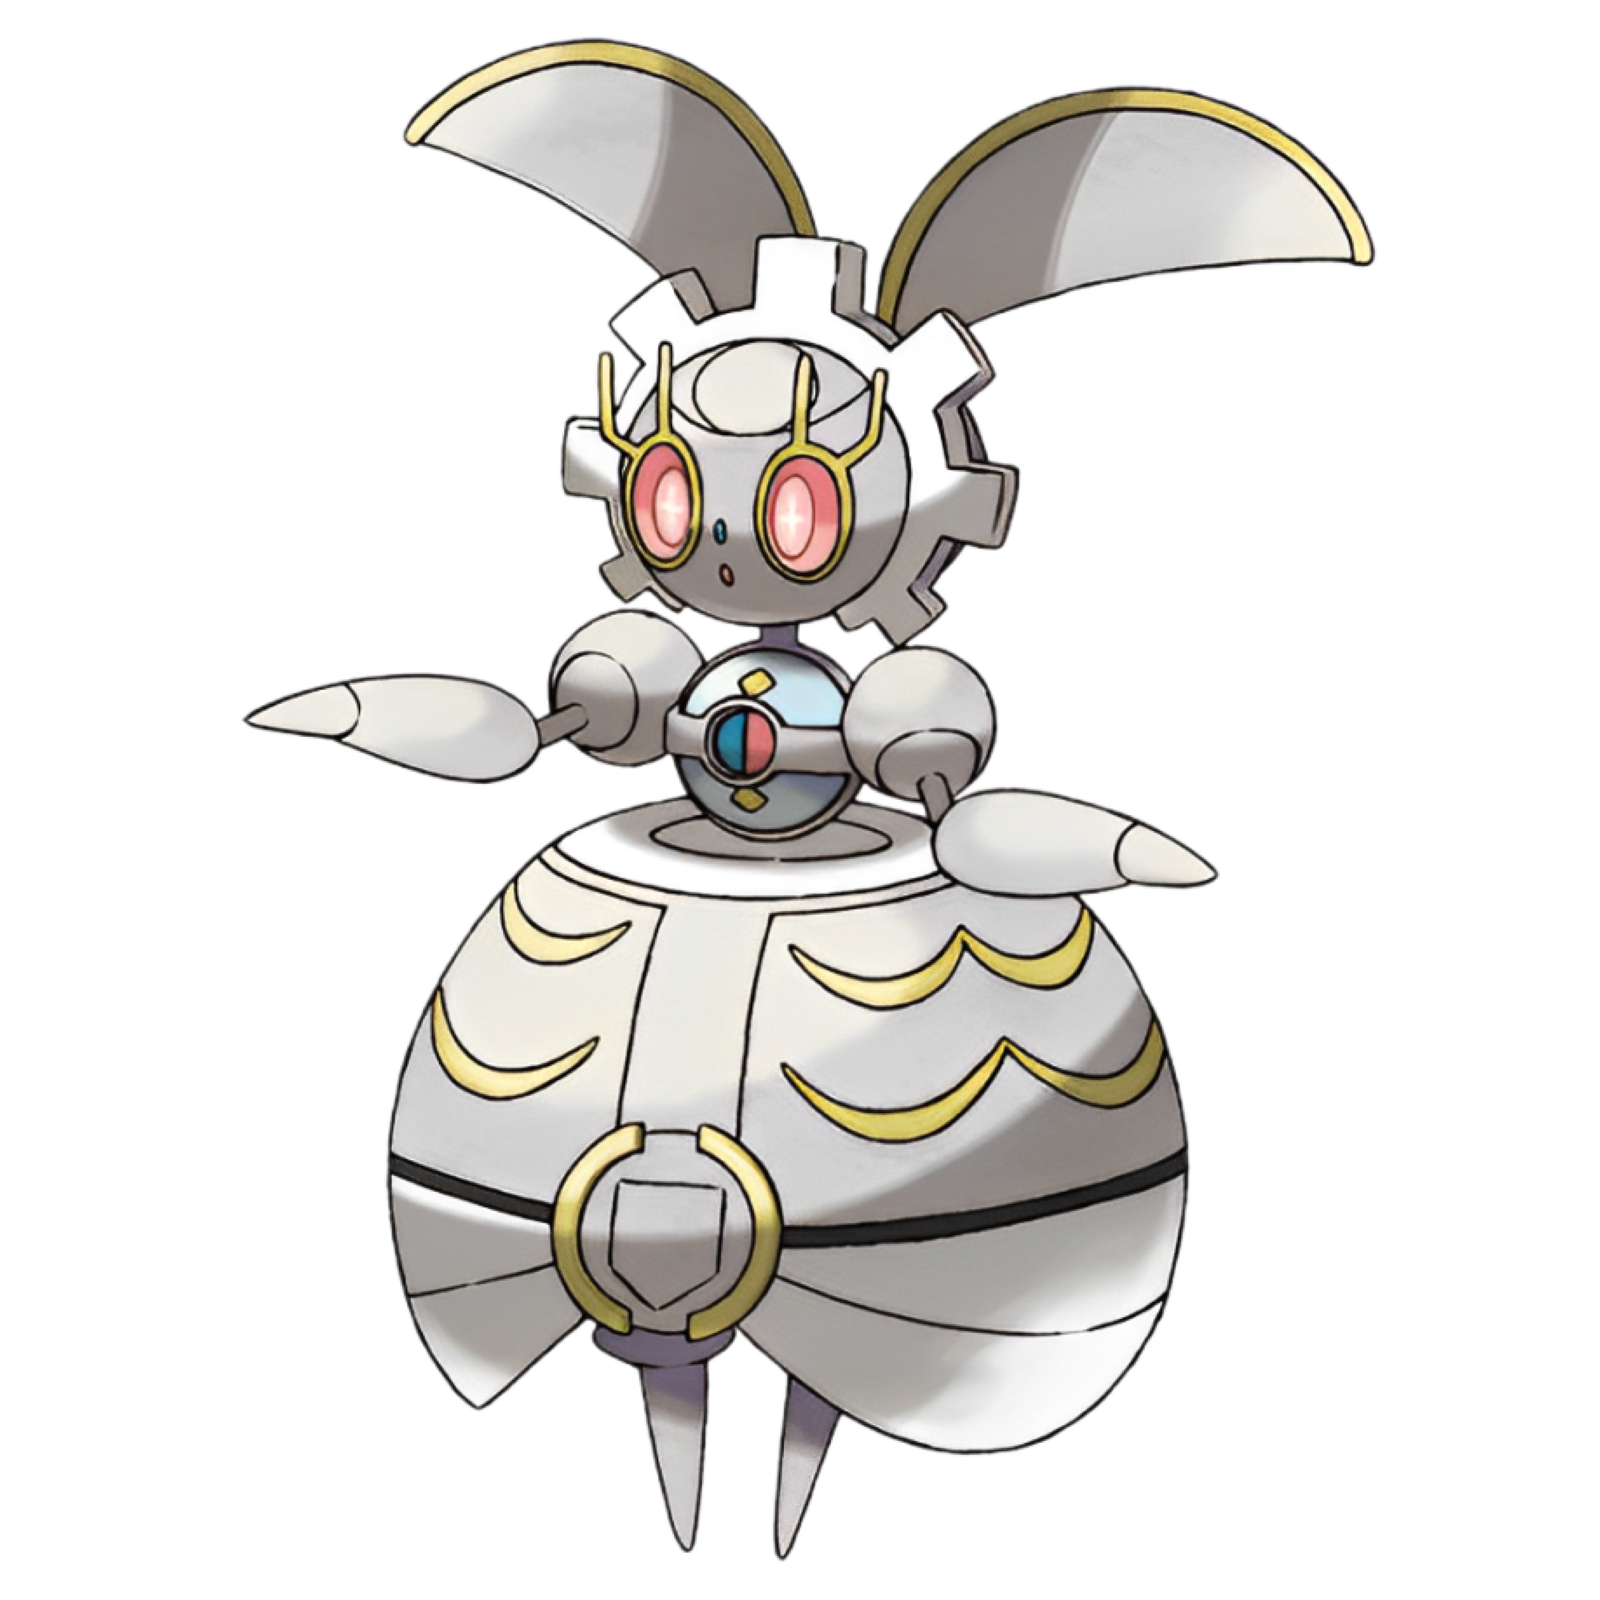 I made 3 alt shiny Mimikyu, my favorite fairy pokemon. What do you